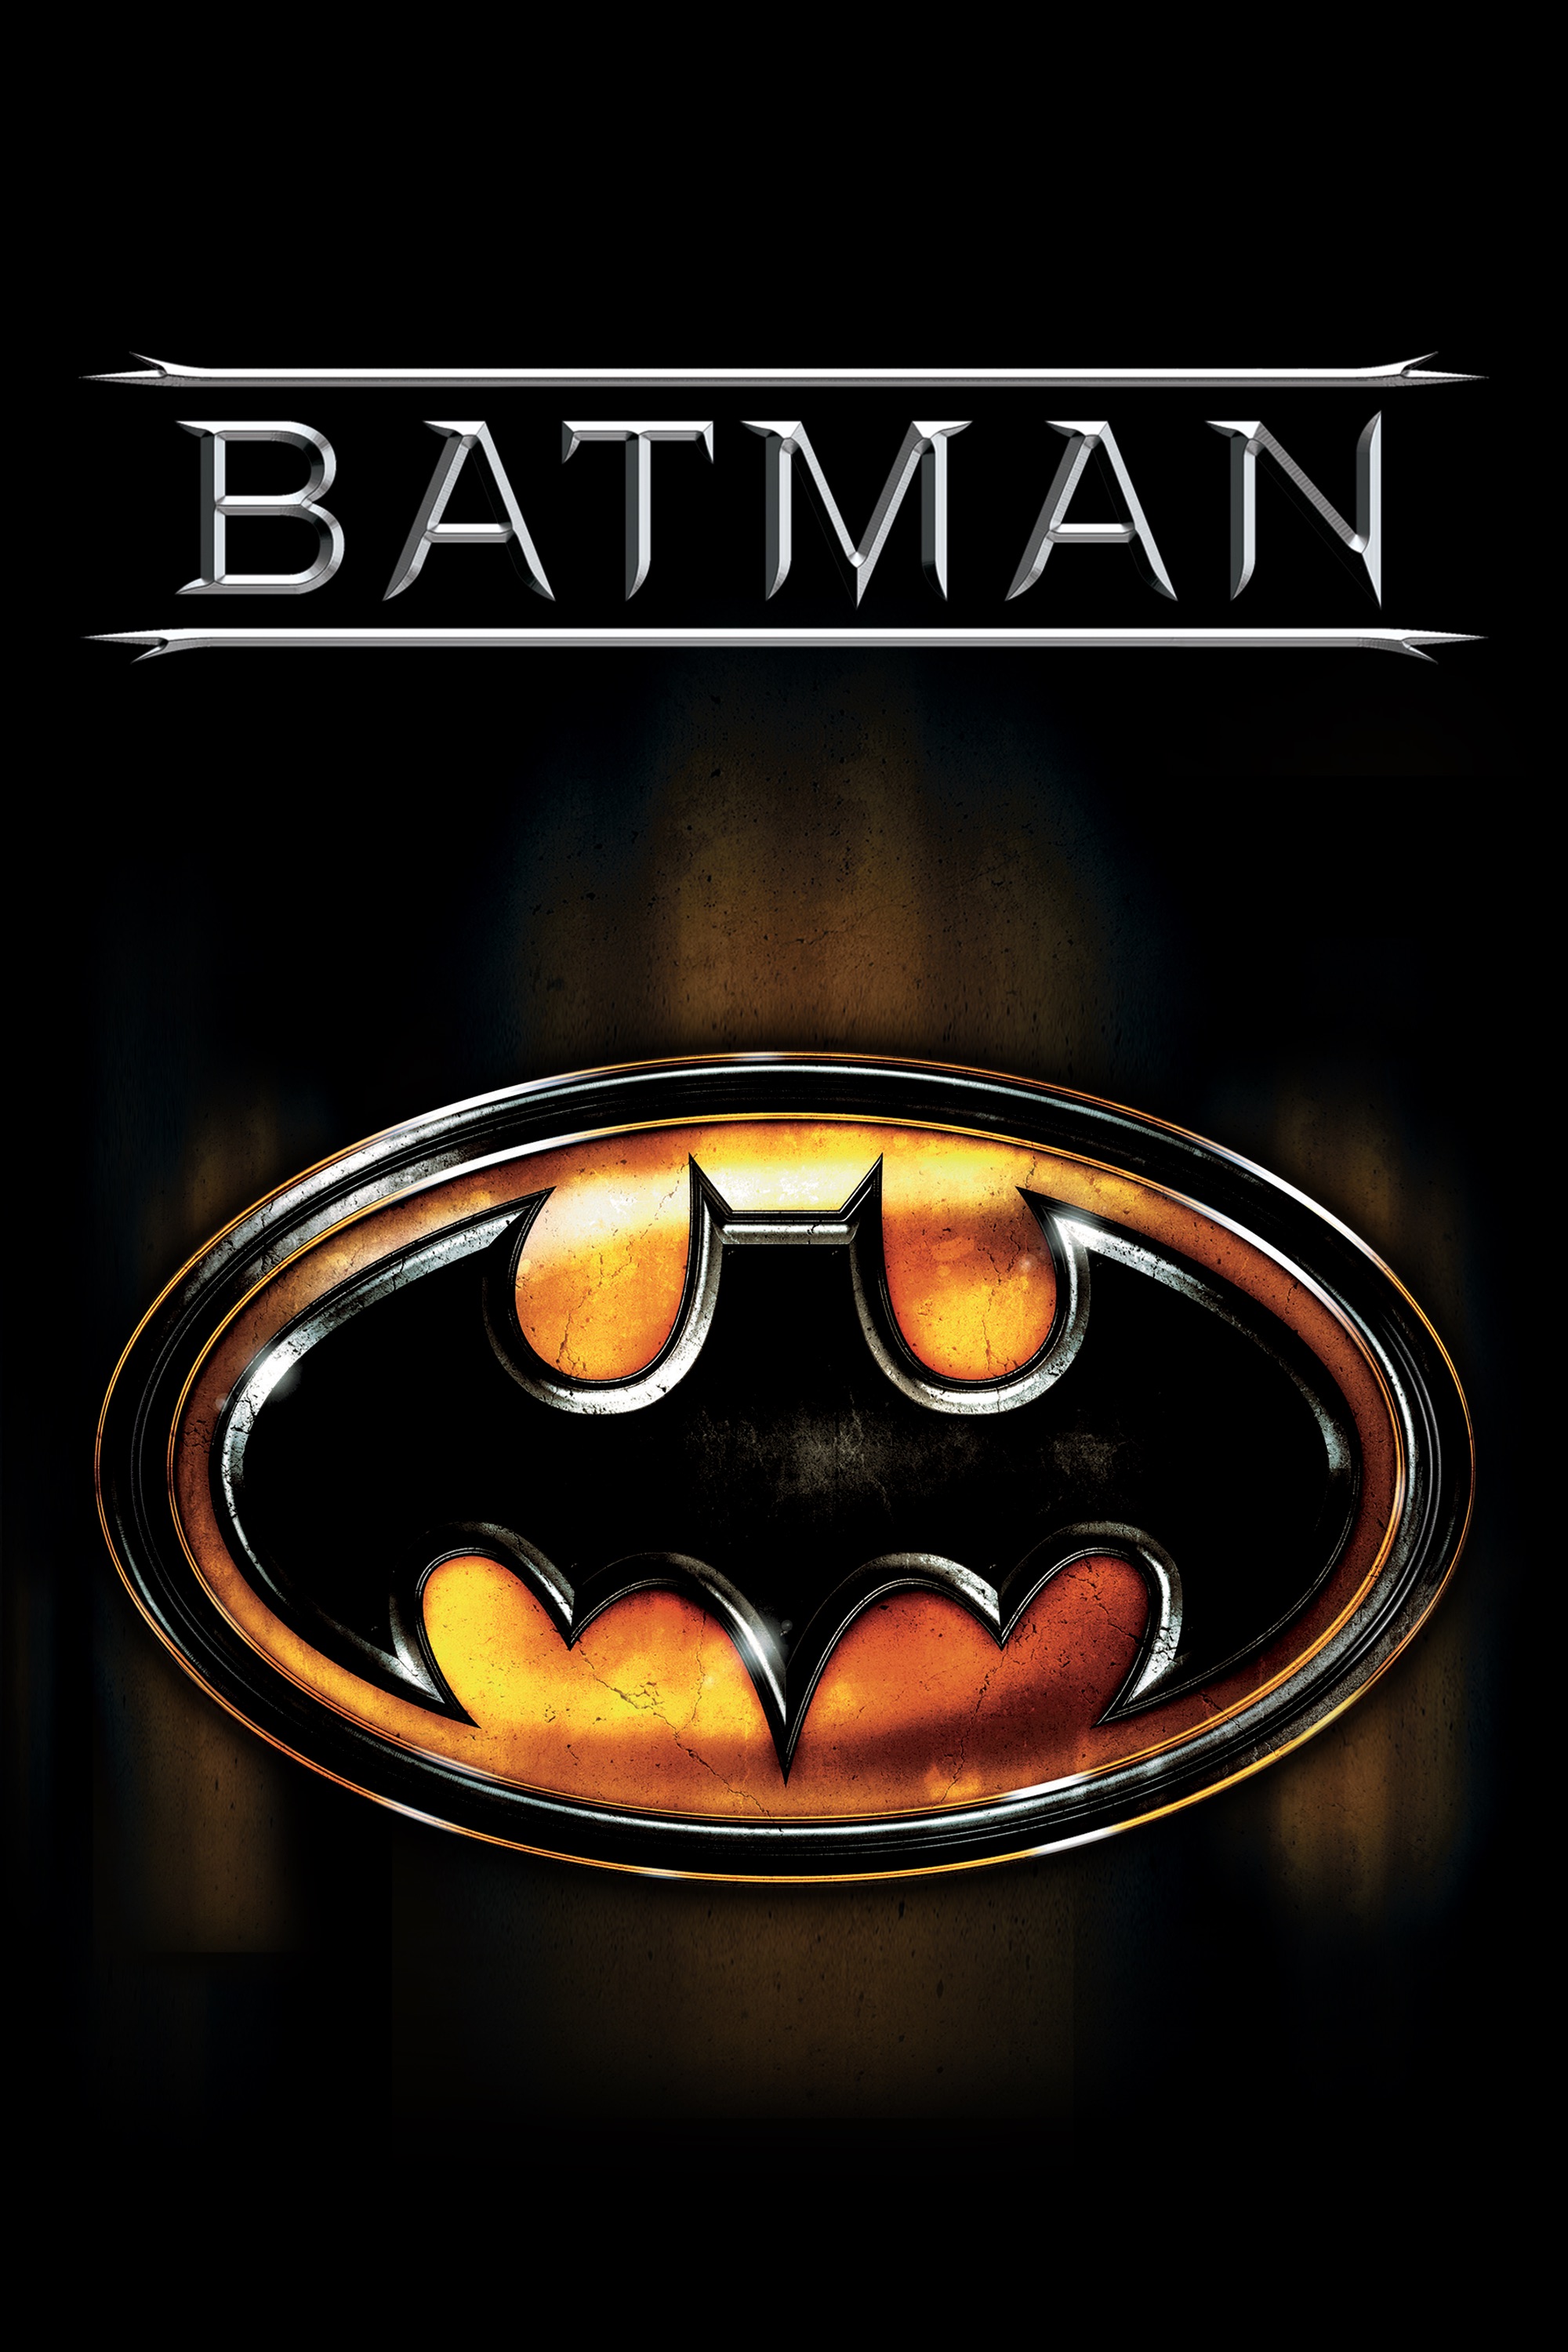 batman forever movie cover